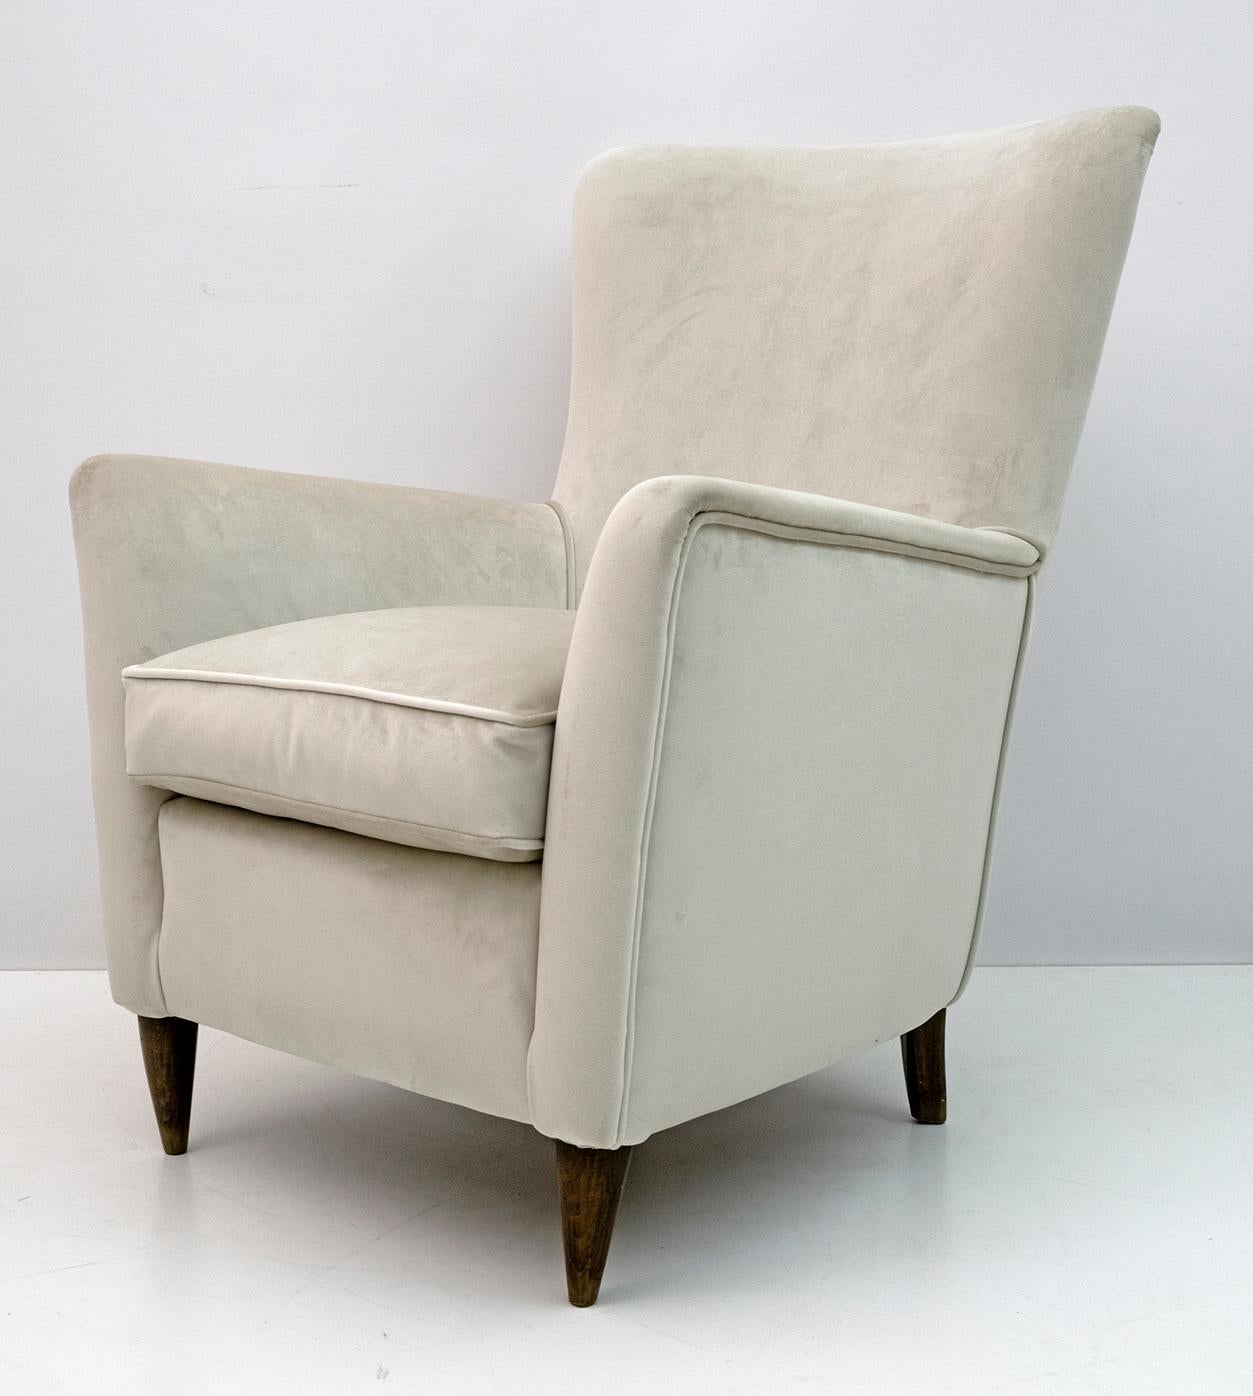 Attributed Gio Ponti Mid-Century Modern Italian Velvet Armchair for Isa, 1950s For Sale 3